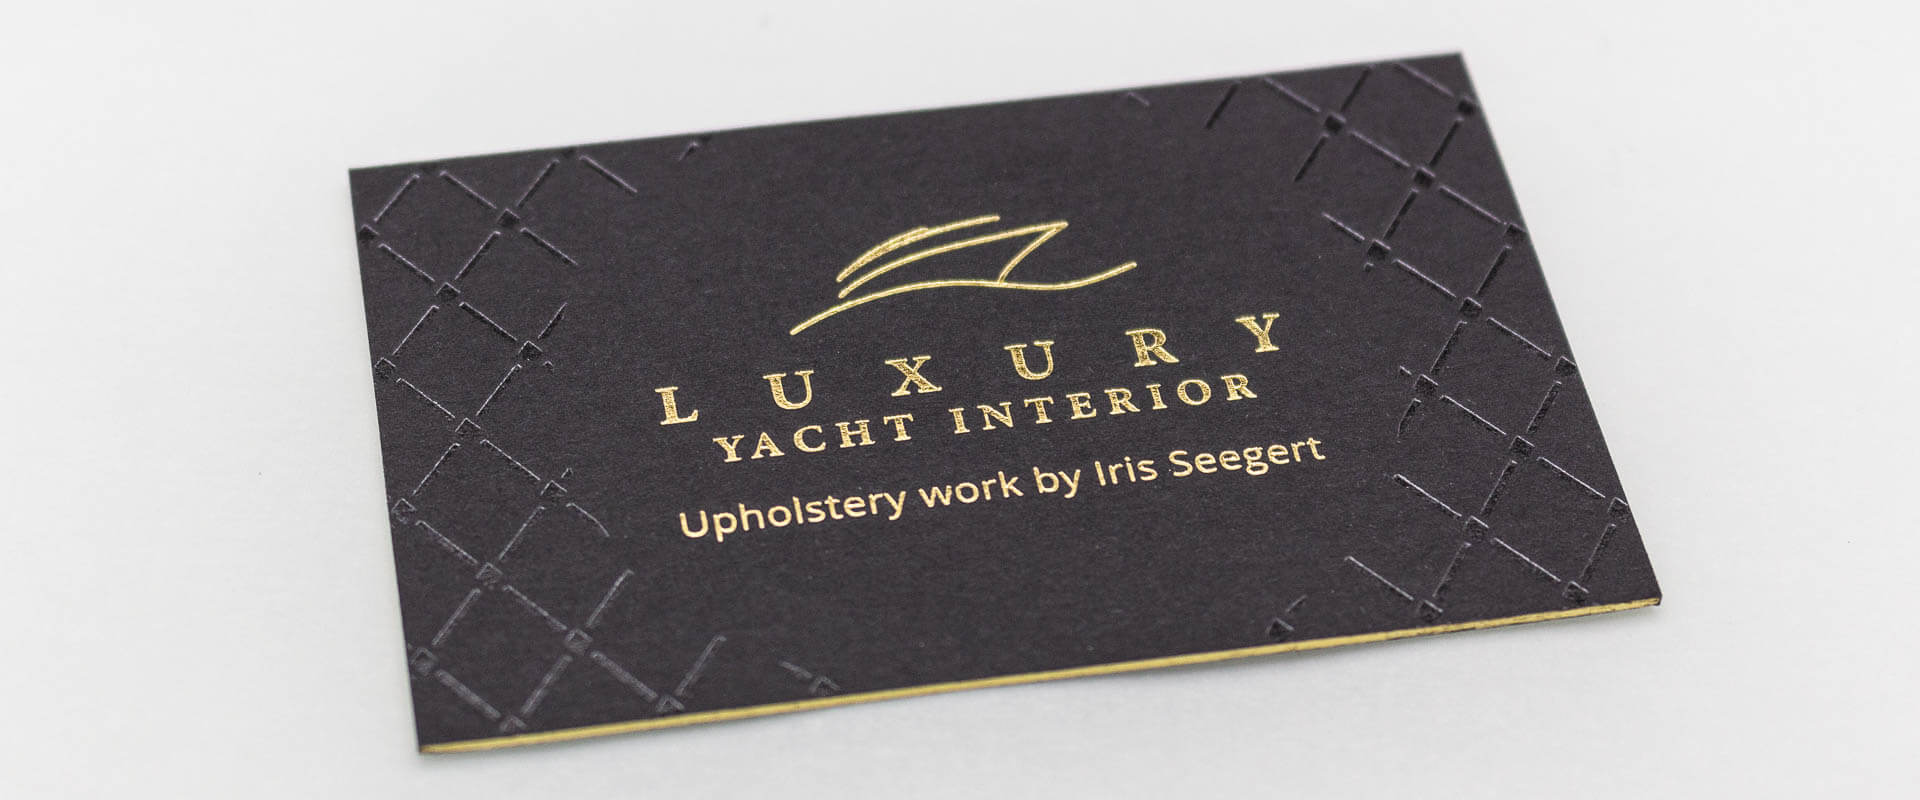 » Luxury Yacht Interior«